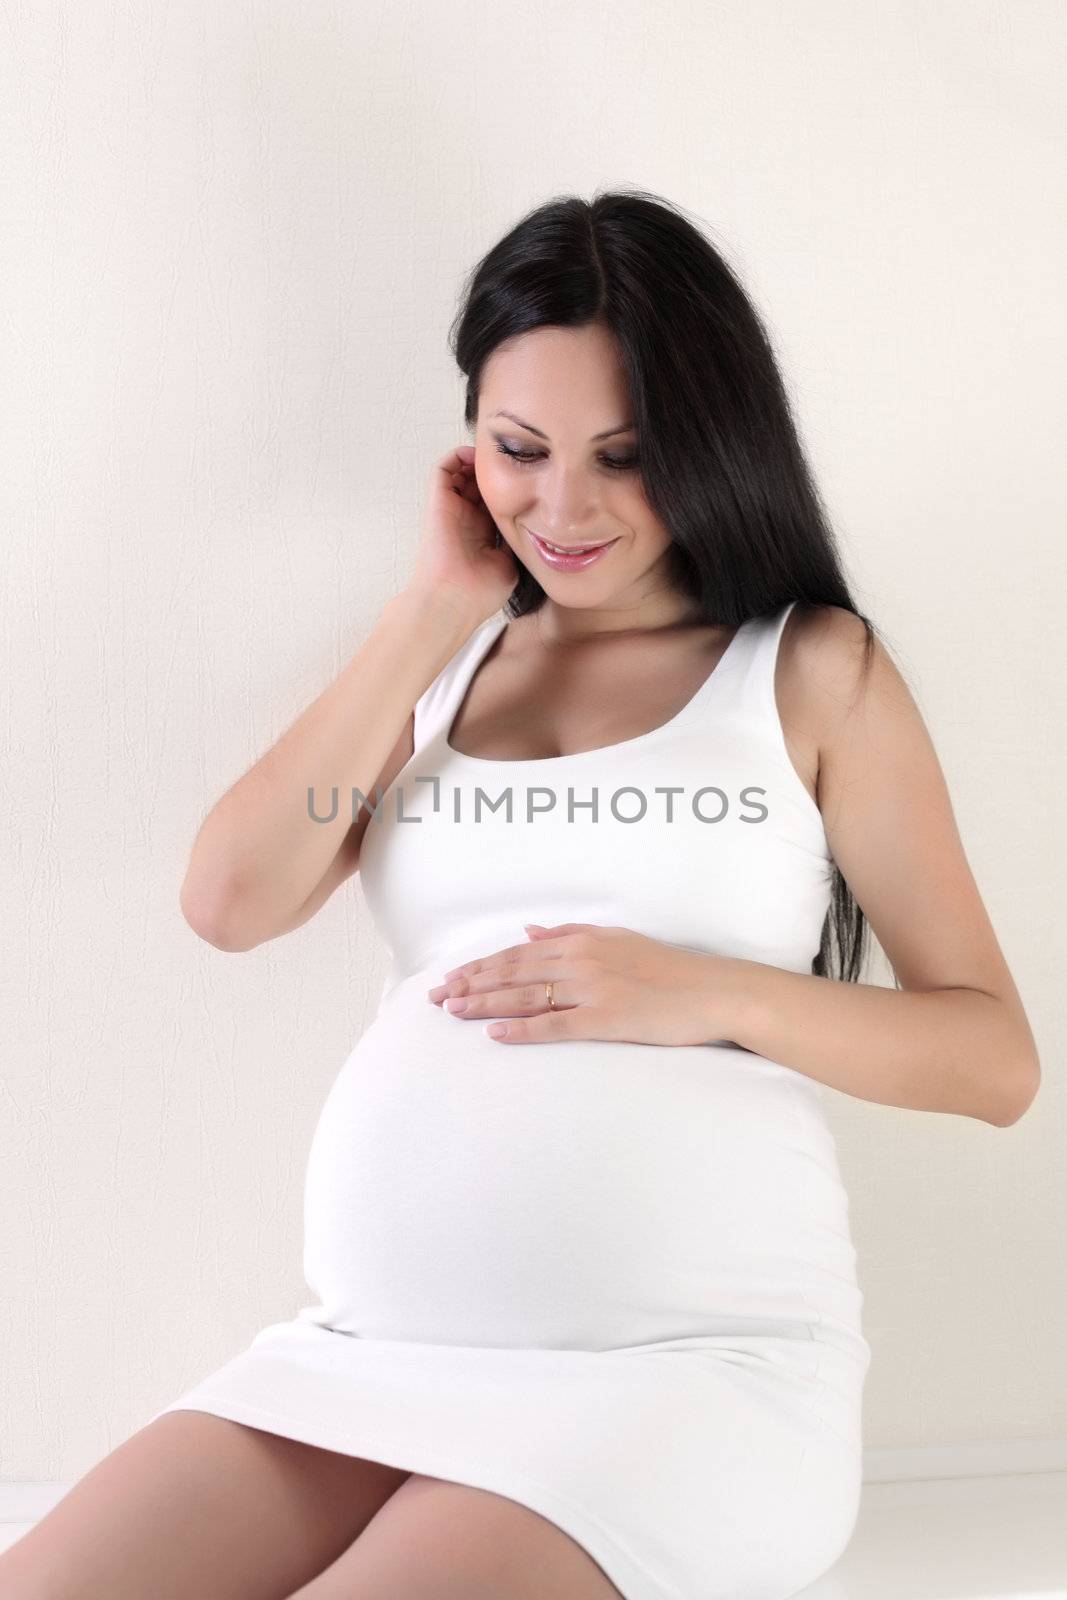 pregnant woman by rudchenko